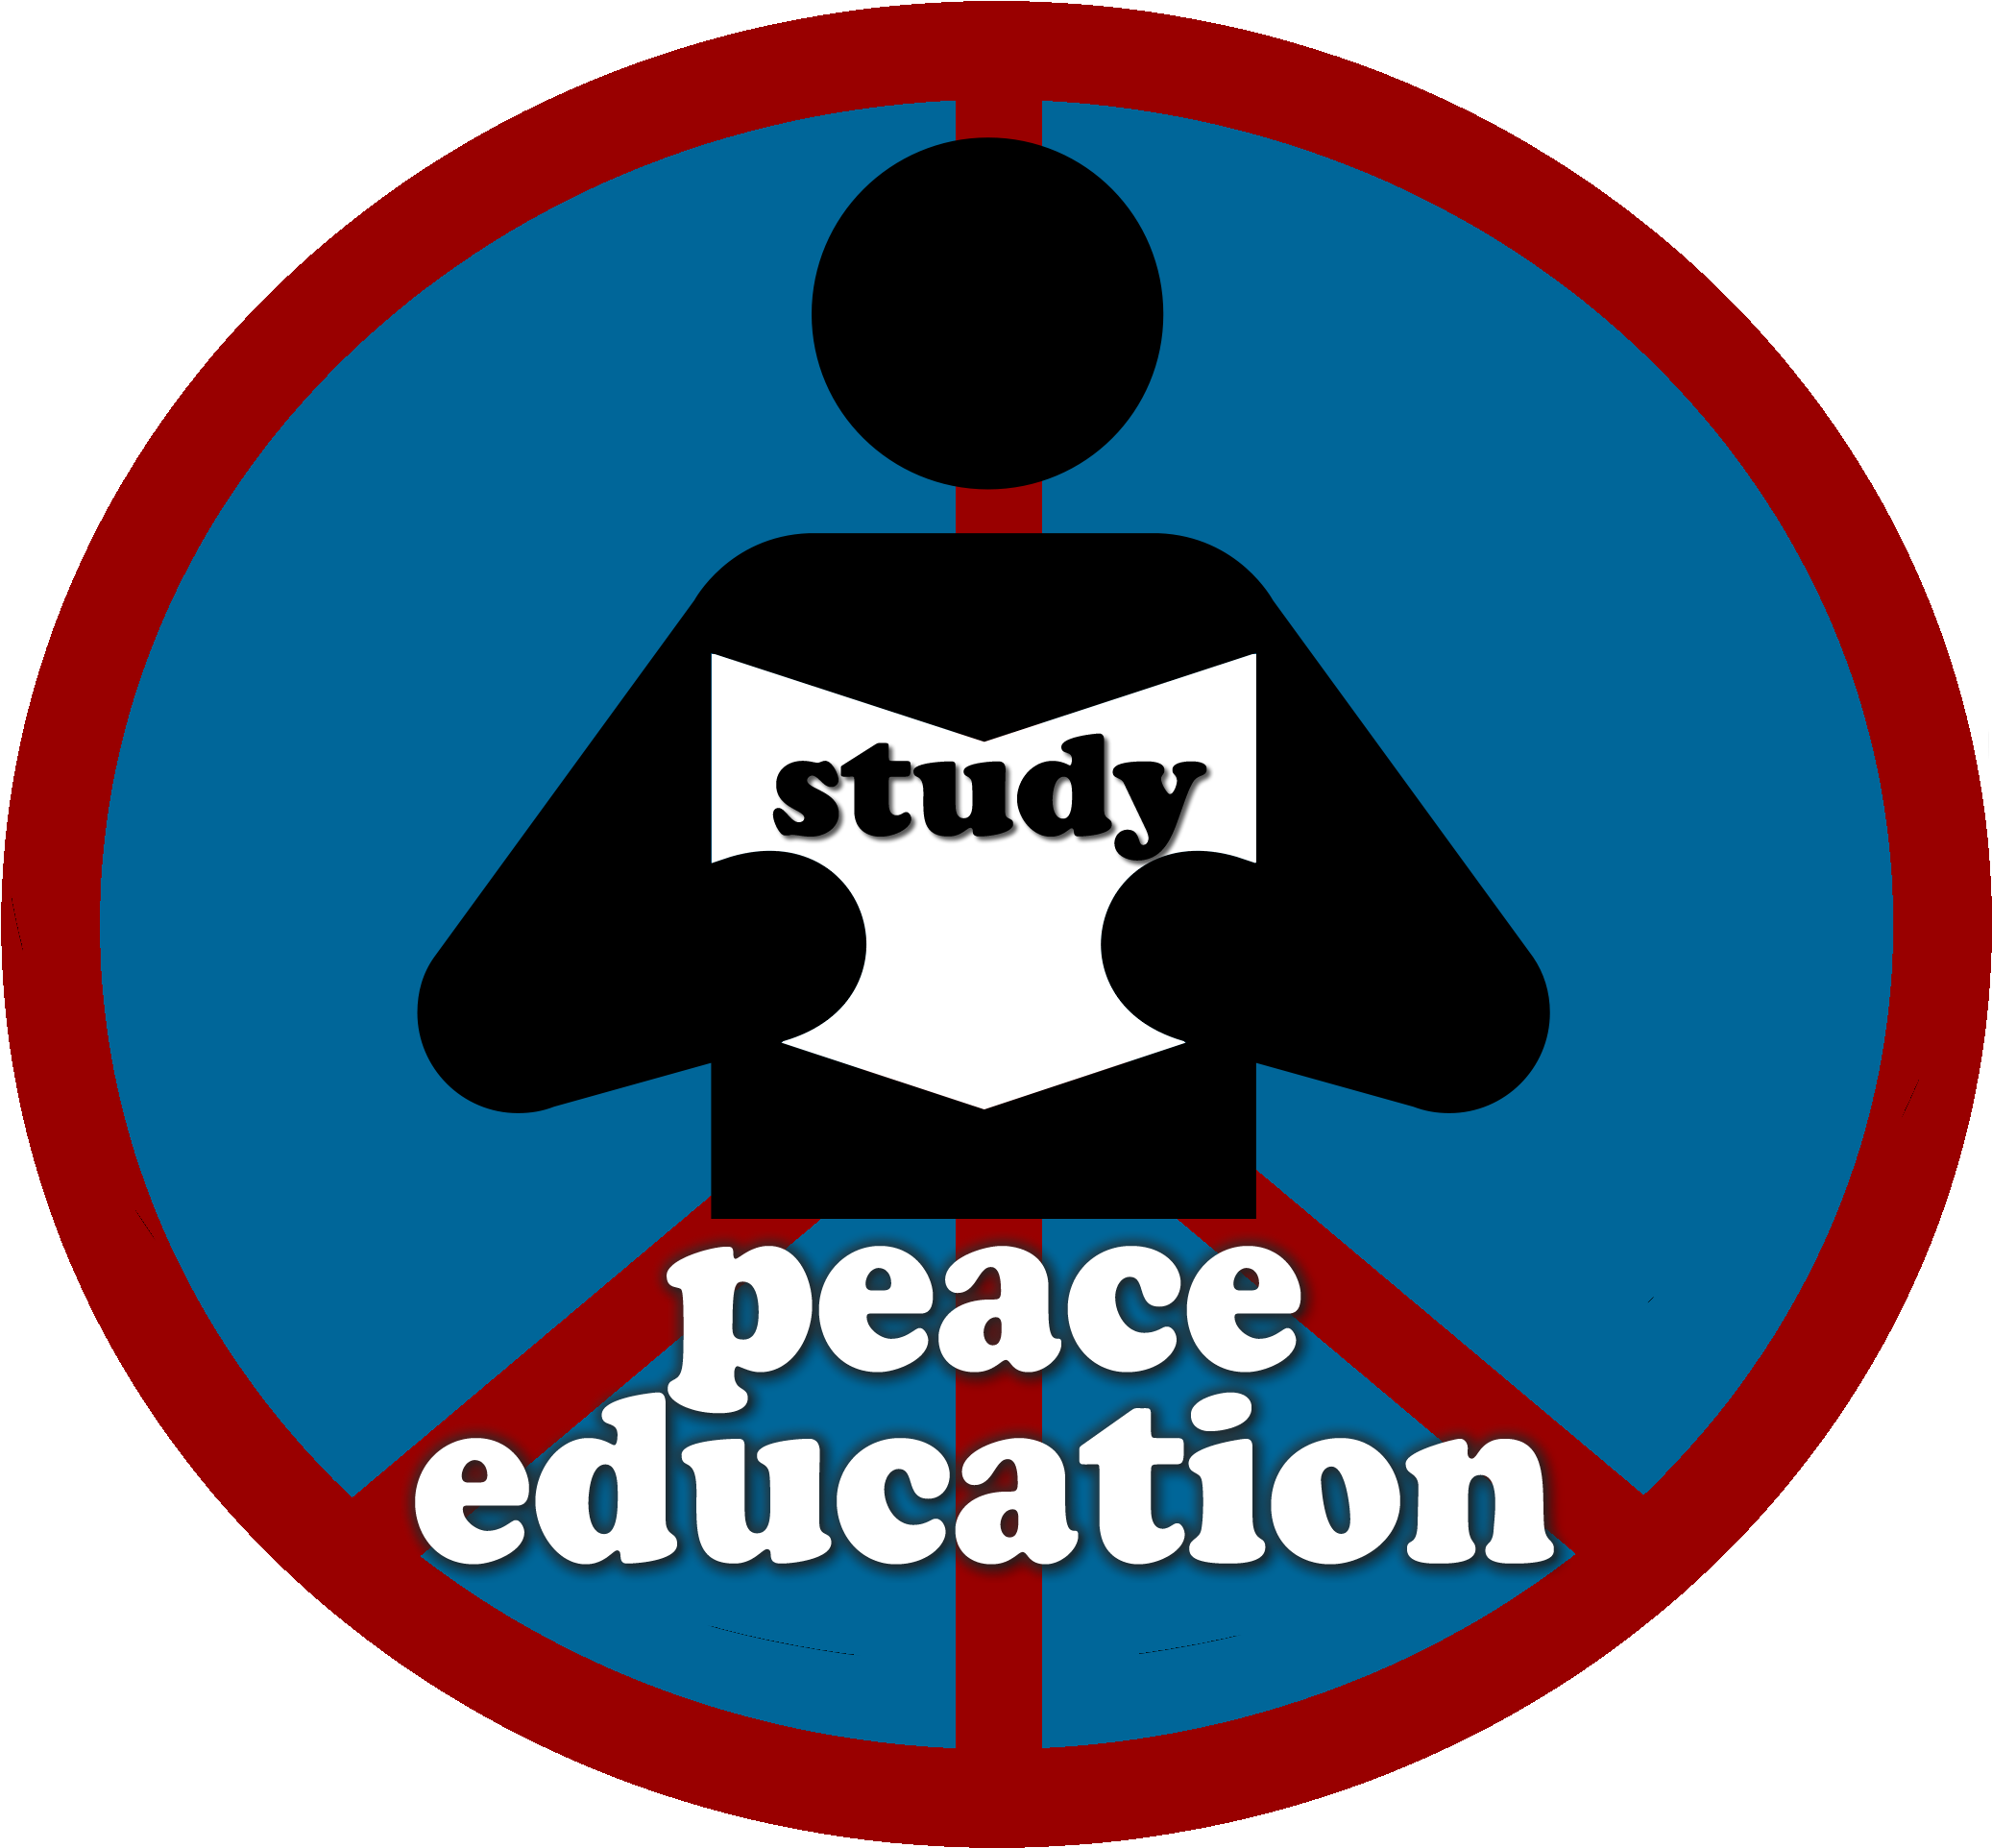 Where To Study Peace Education - Peace Education (2128x2000)